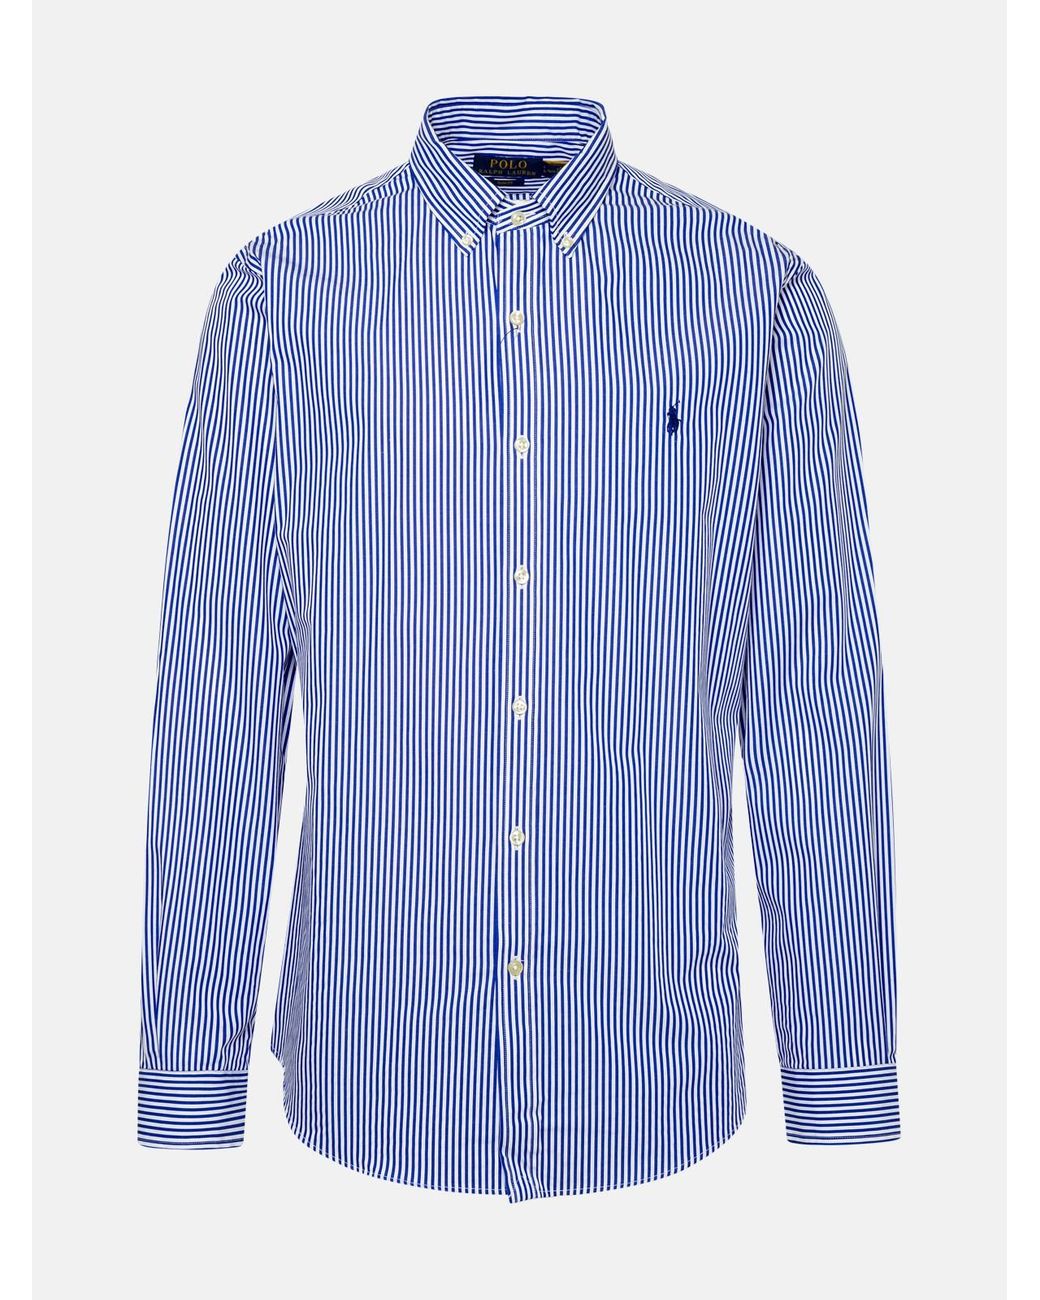 Polo Ralph Lauren Blue Striped Cotton Blend Shirt for Men